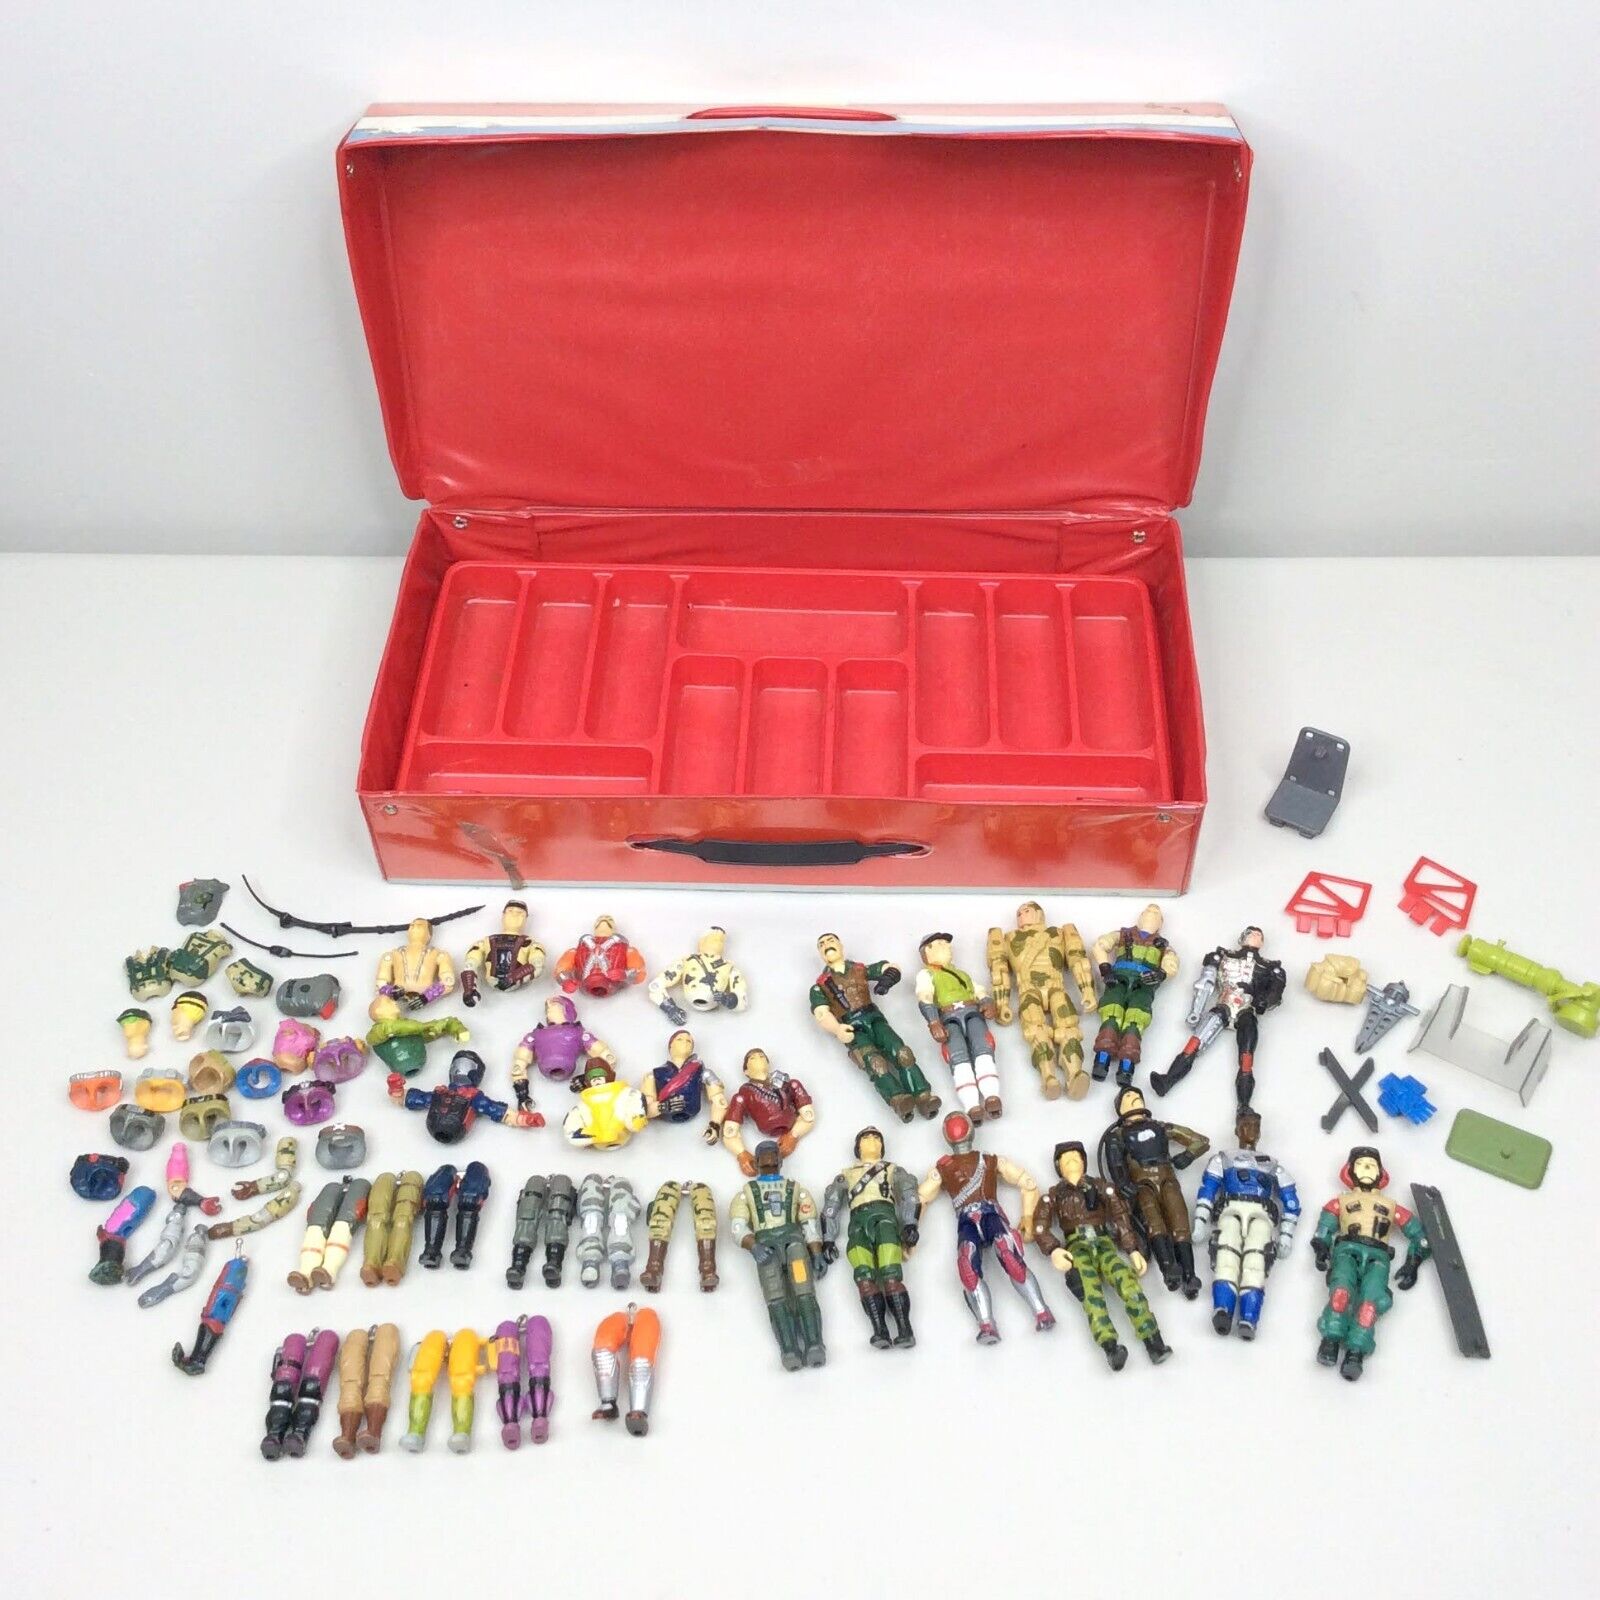 VTG GI Joe ARAH Collectors Case Action Figures & Accessories 1980s 90s Hasbro